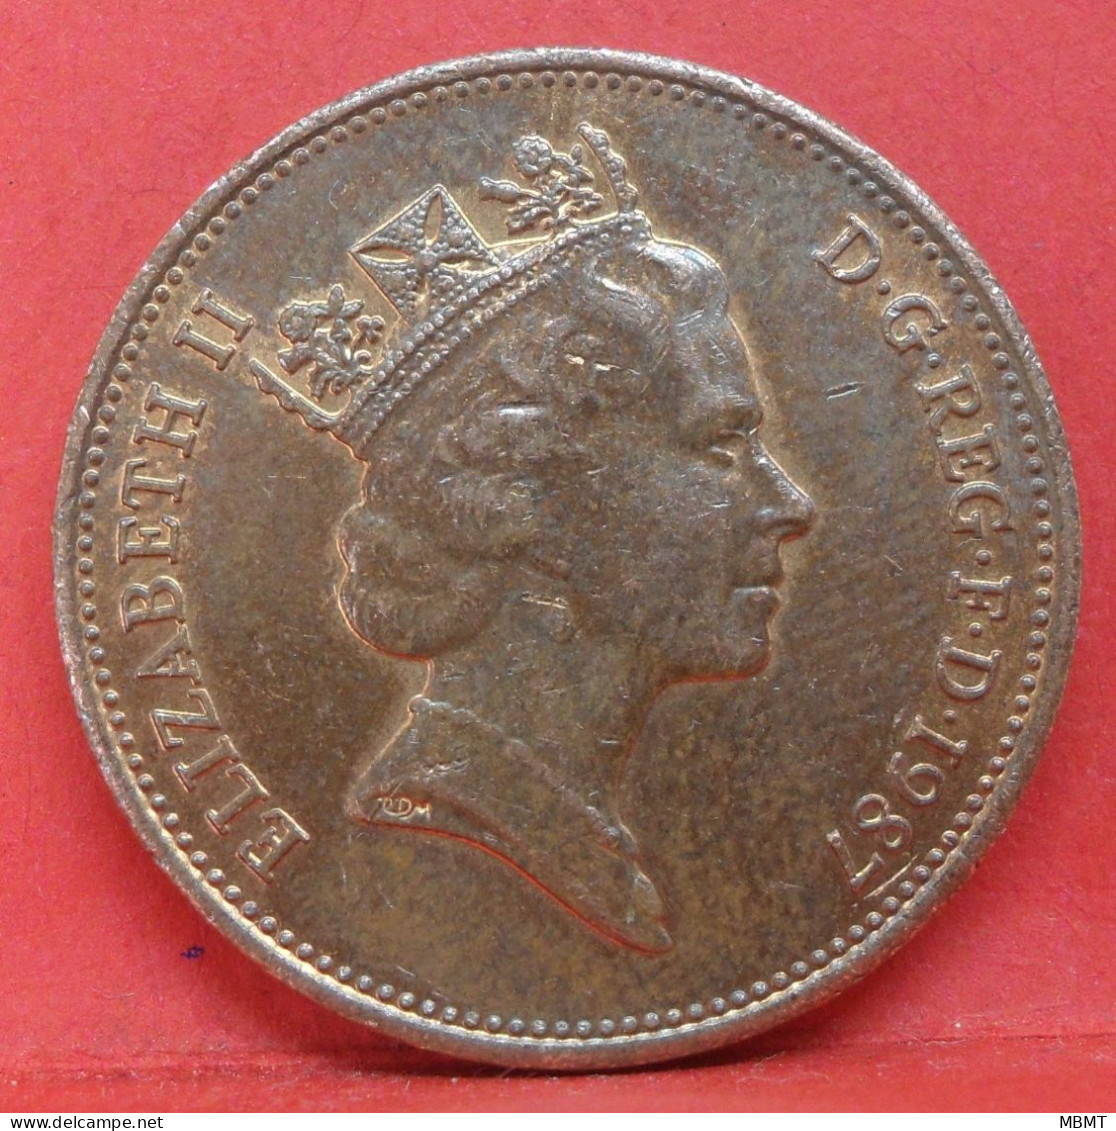 2 Pence 1987 - SUP - Pièce Monnaie Grande-Bretagne - Article N°2707 - 2 Pence & 2 New Pence